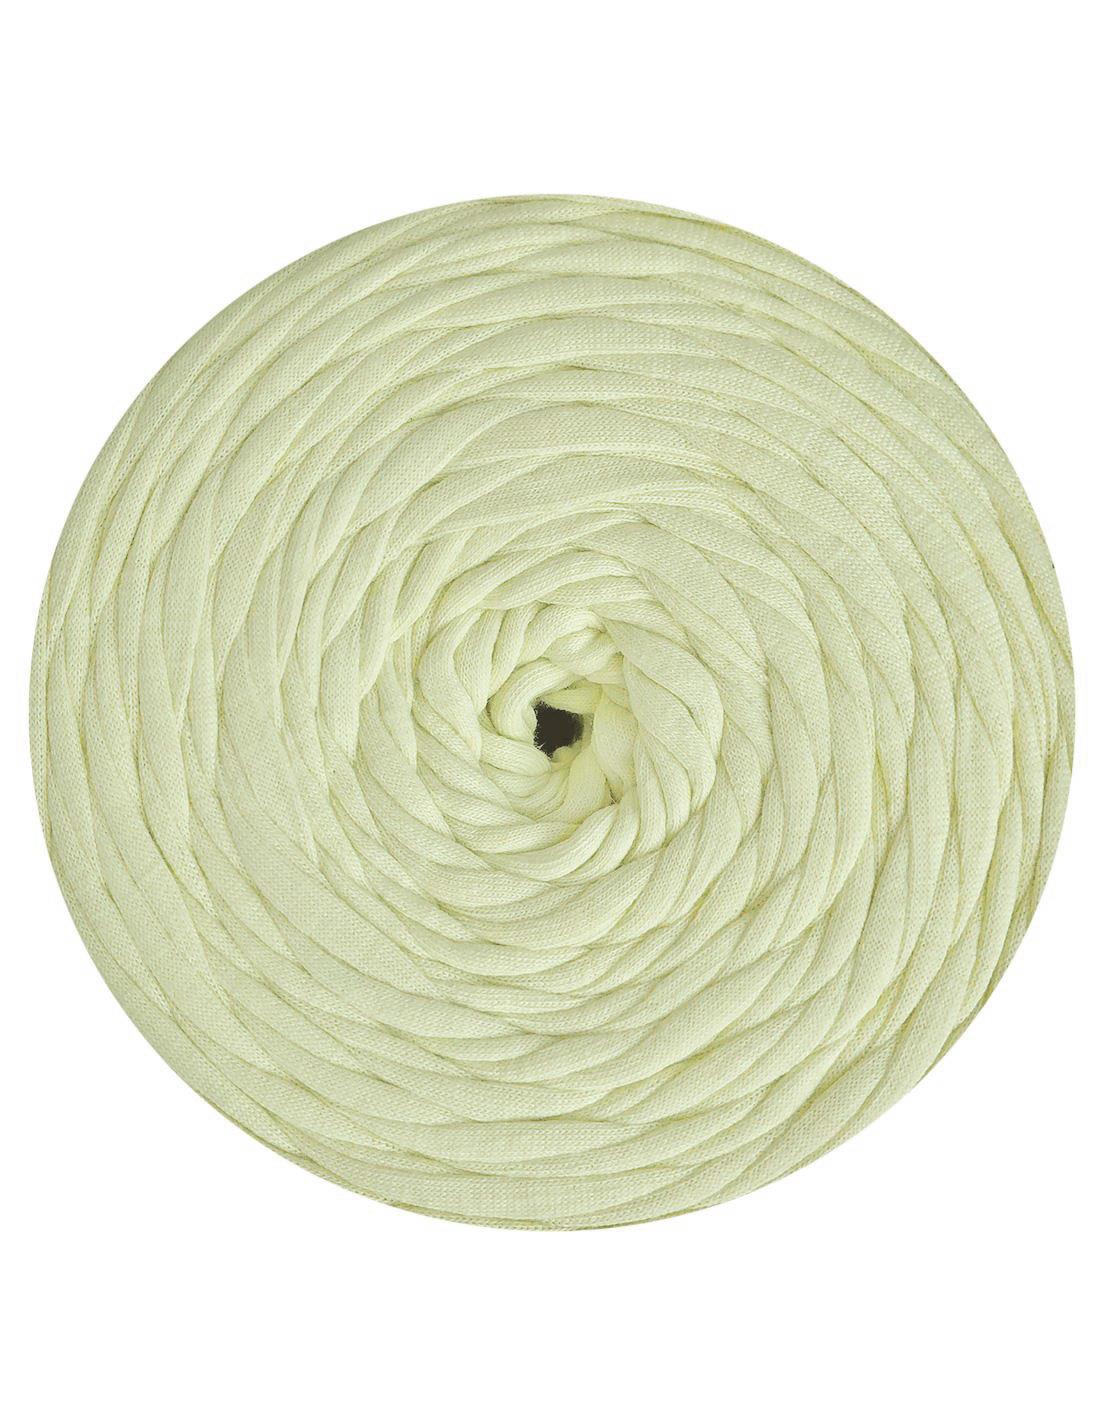 Pale green t-shirt yarn by Hoooked Zpagetti (100-120m)